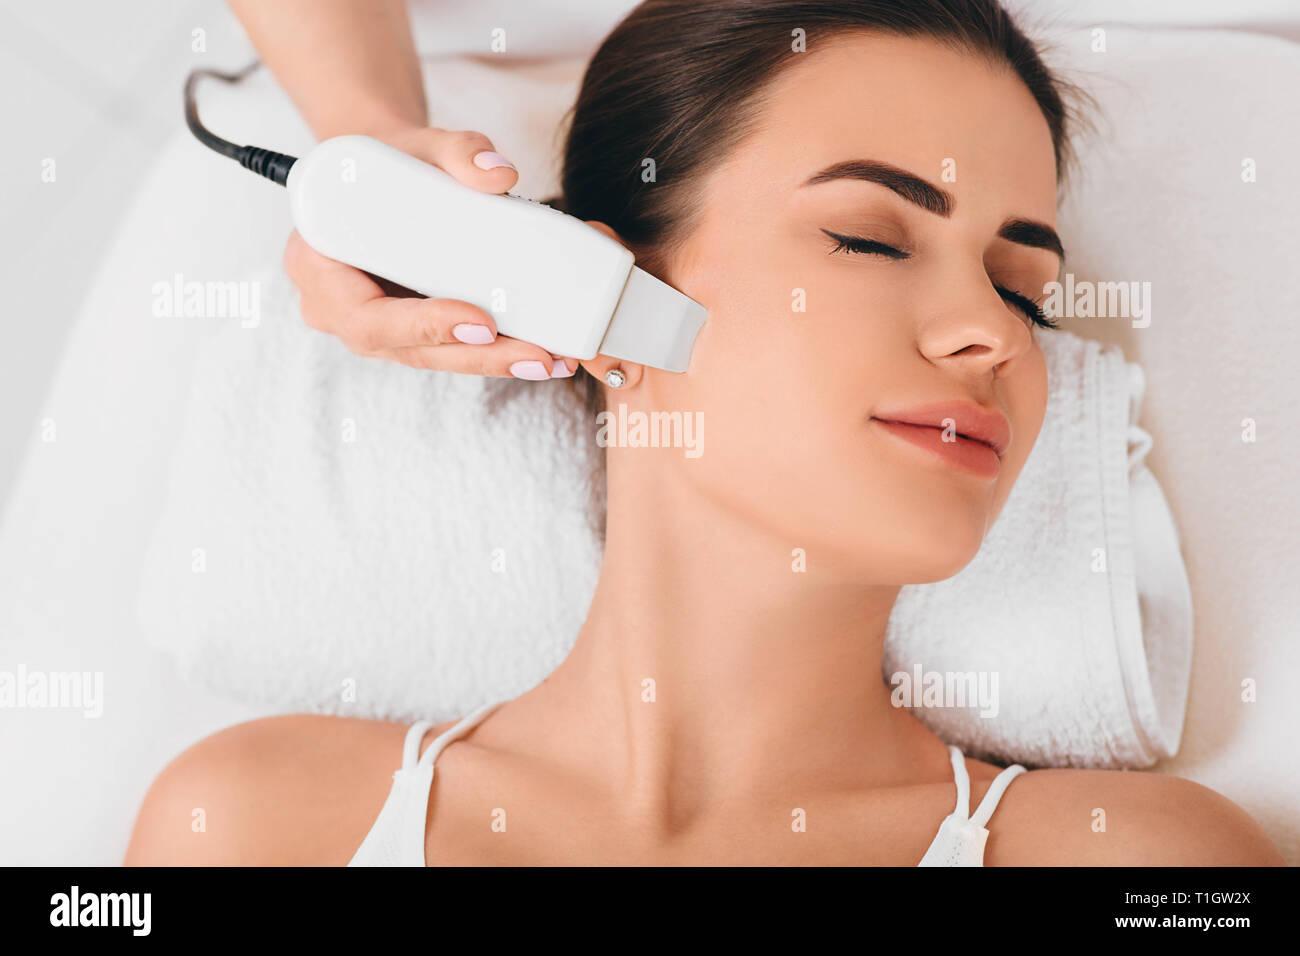 Beautiful woman receiving ultrasonic facial exfoliation at spa Stock Photo